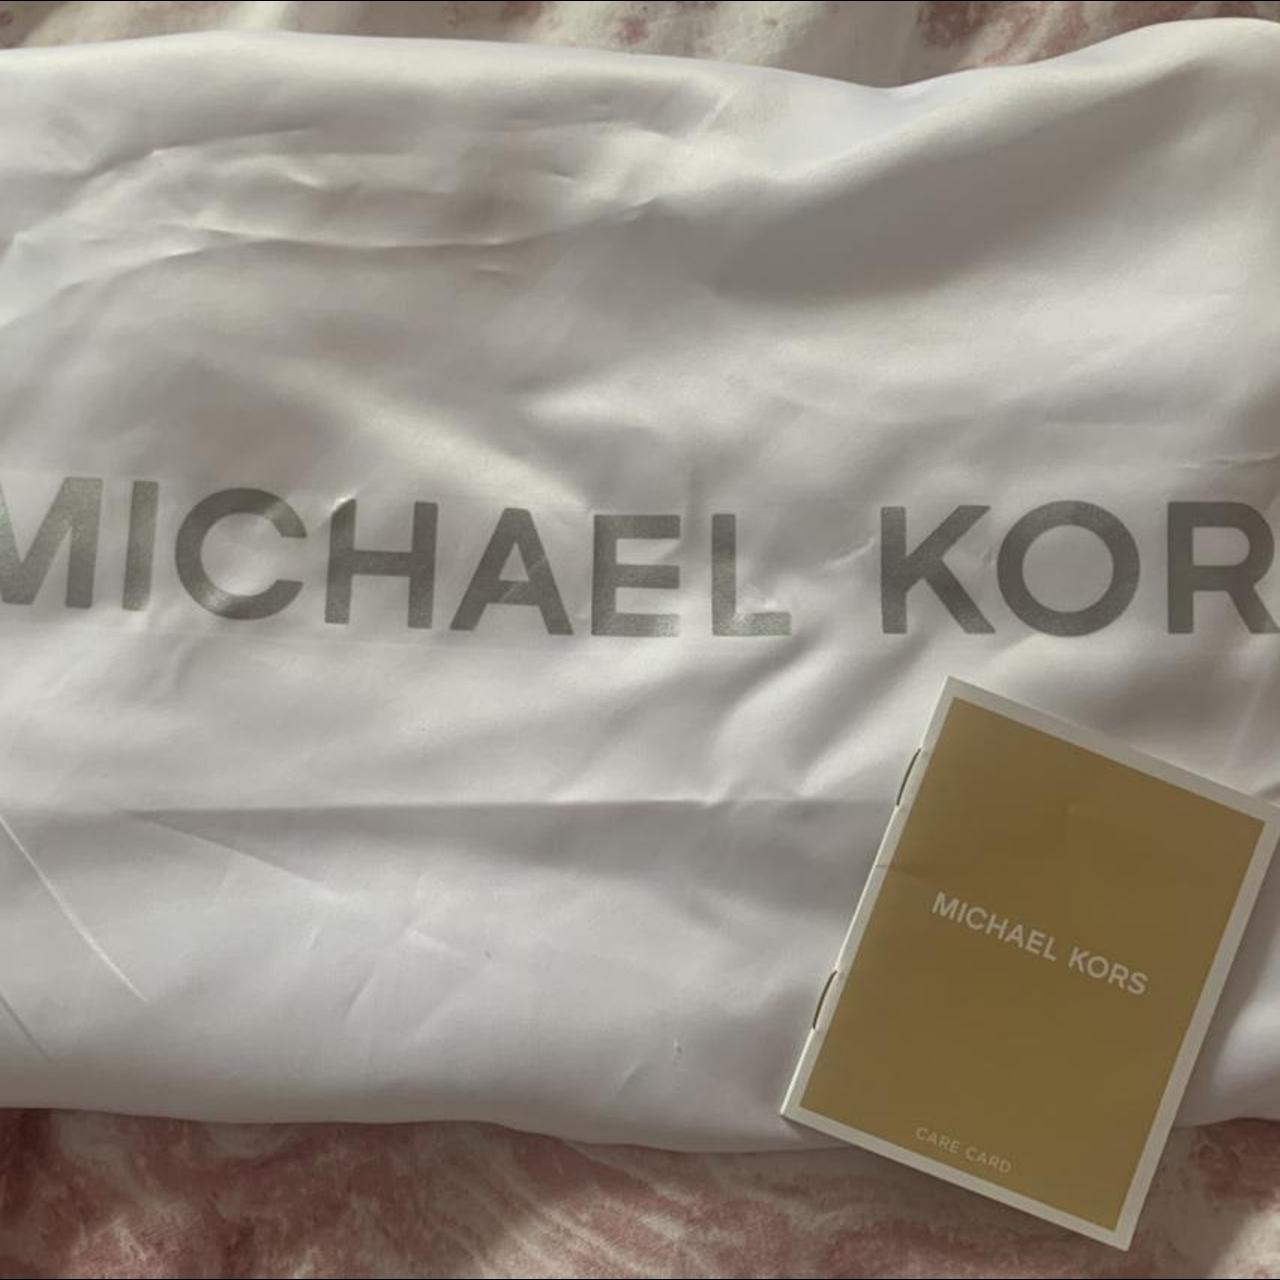 Authentic Michael Kors “Multi Pochette” This is - Depop